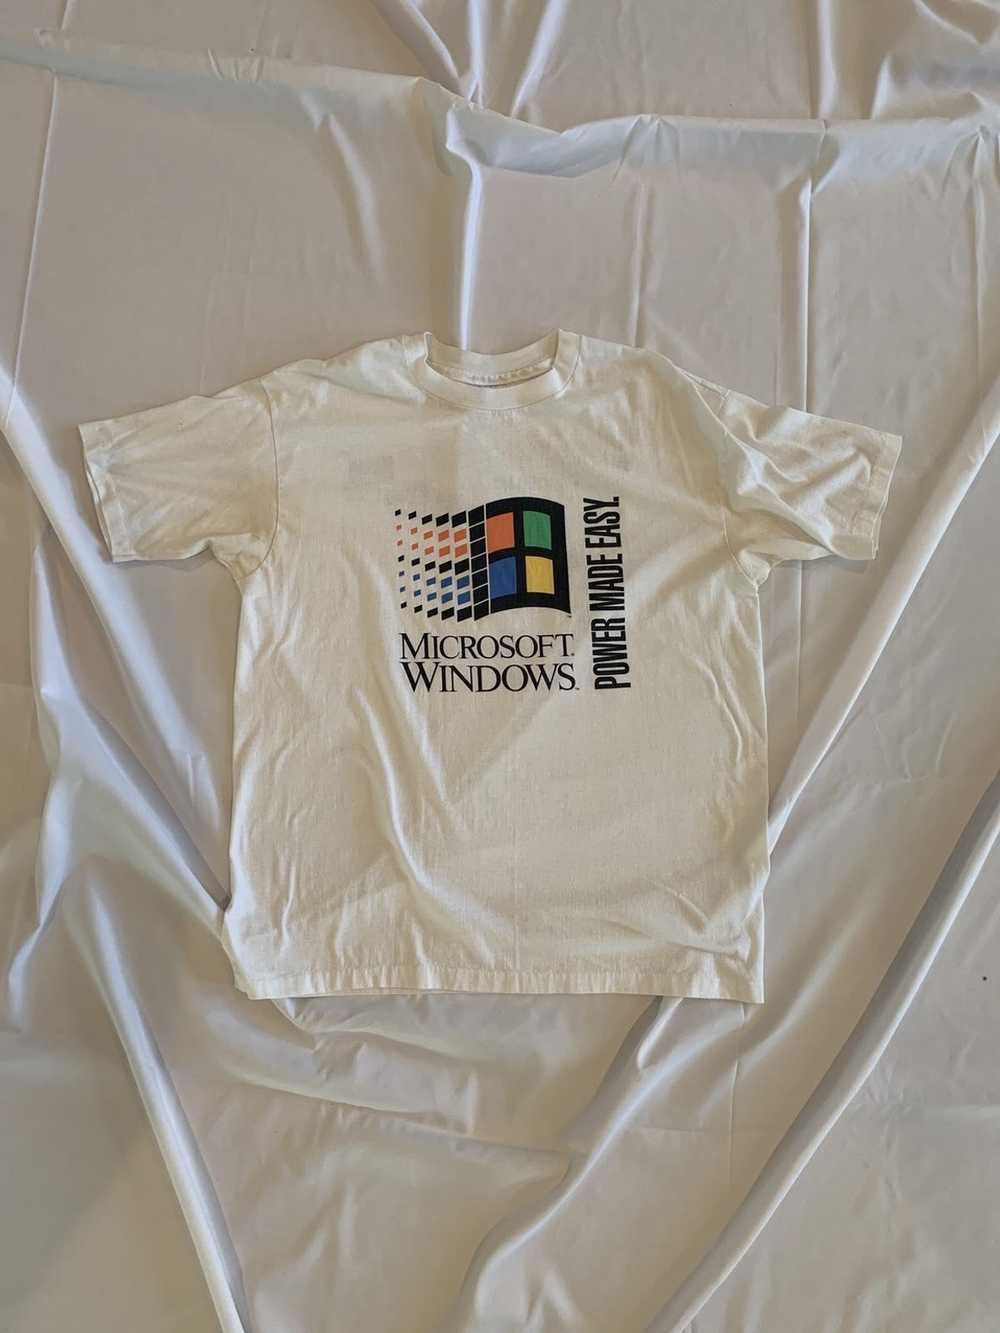 Microsoft Original Microsoft Windows Shirt - image 1